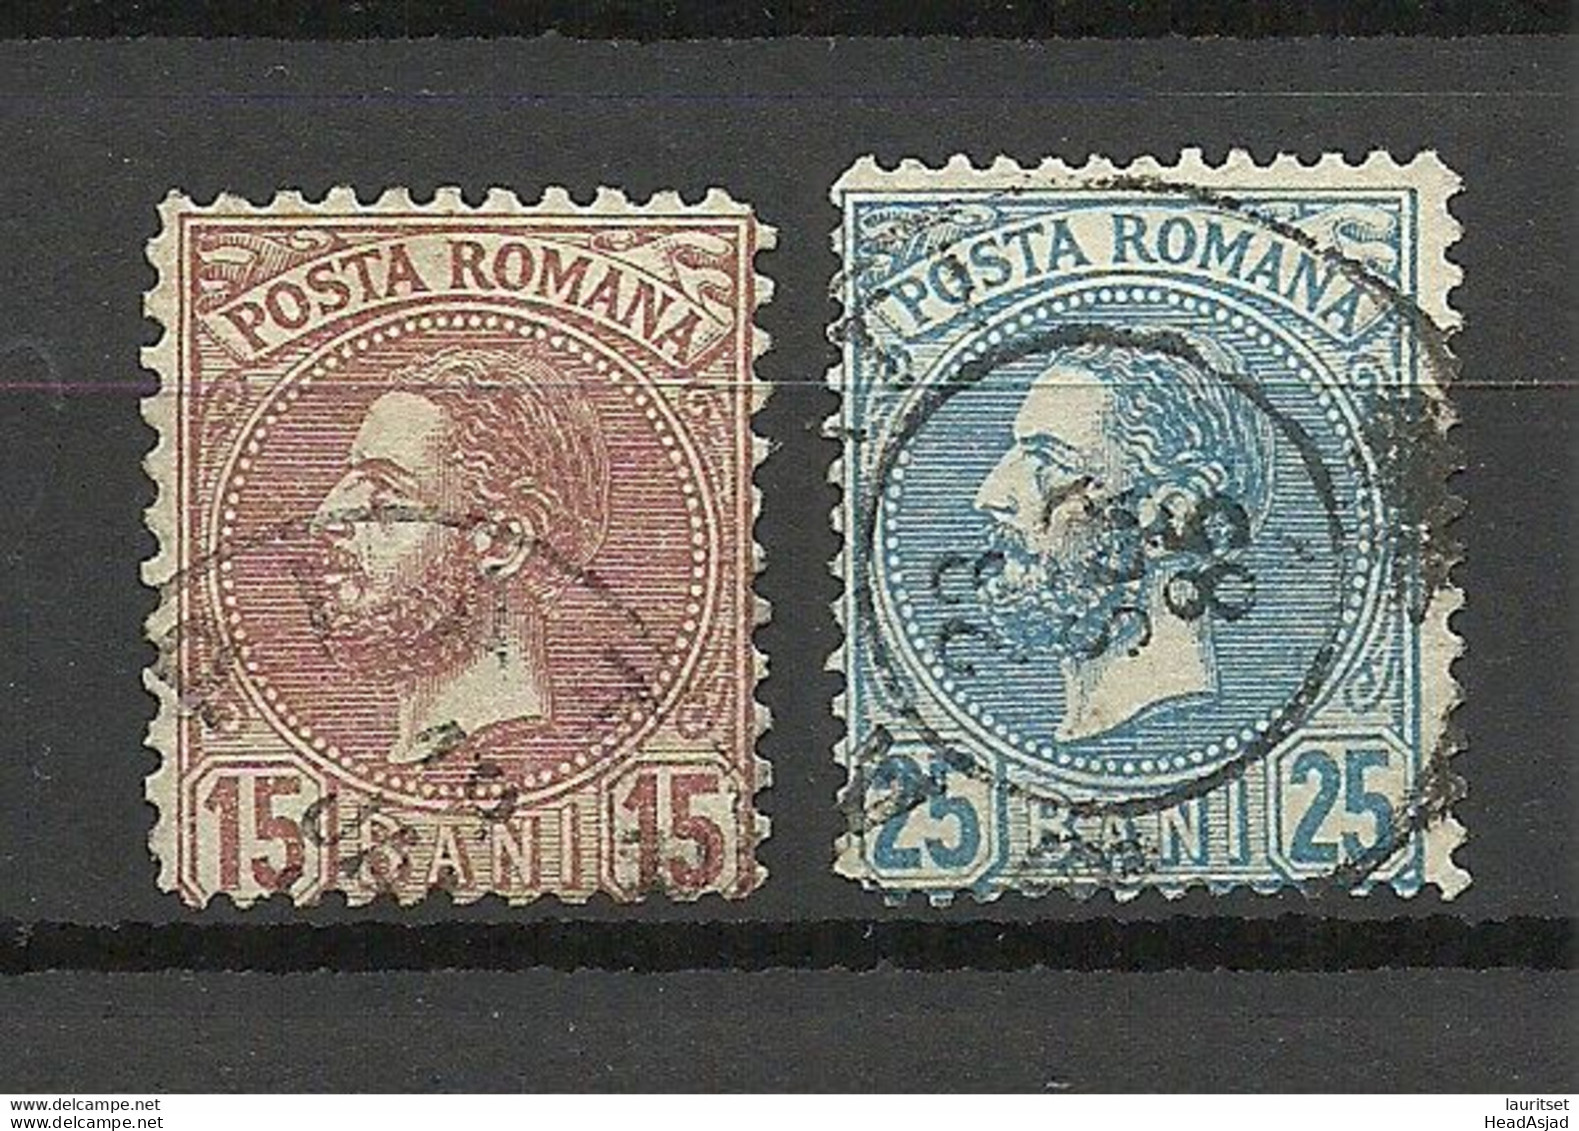 ROMANIA Rumänien 1880 Michel 55 - 56 O - 1858-1880 Fürstentum Moldau